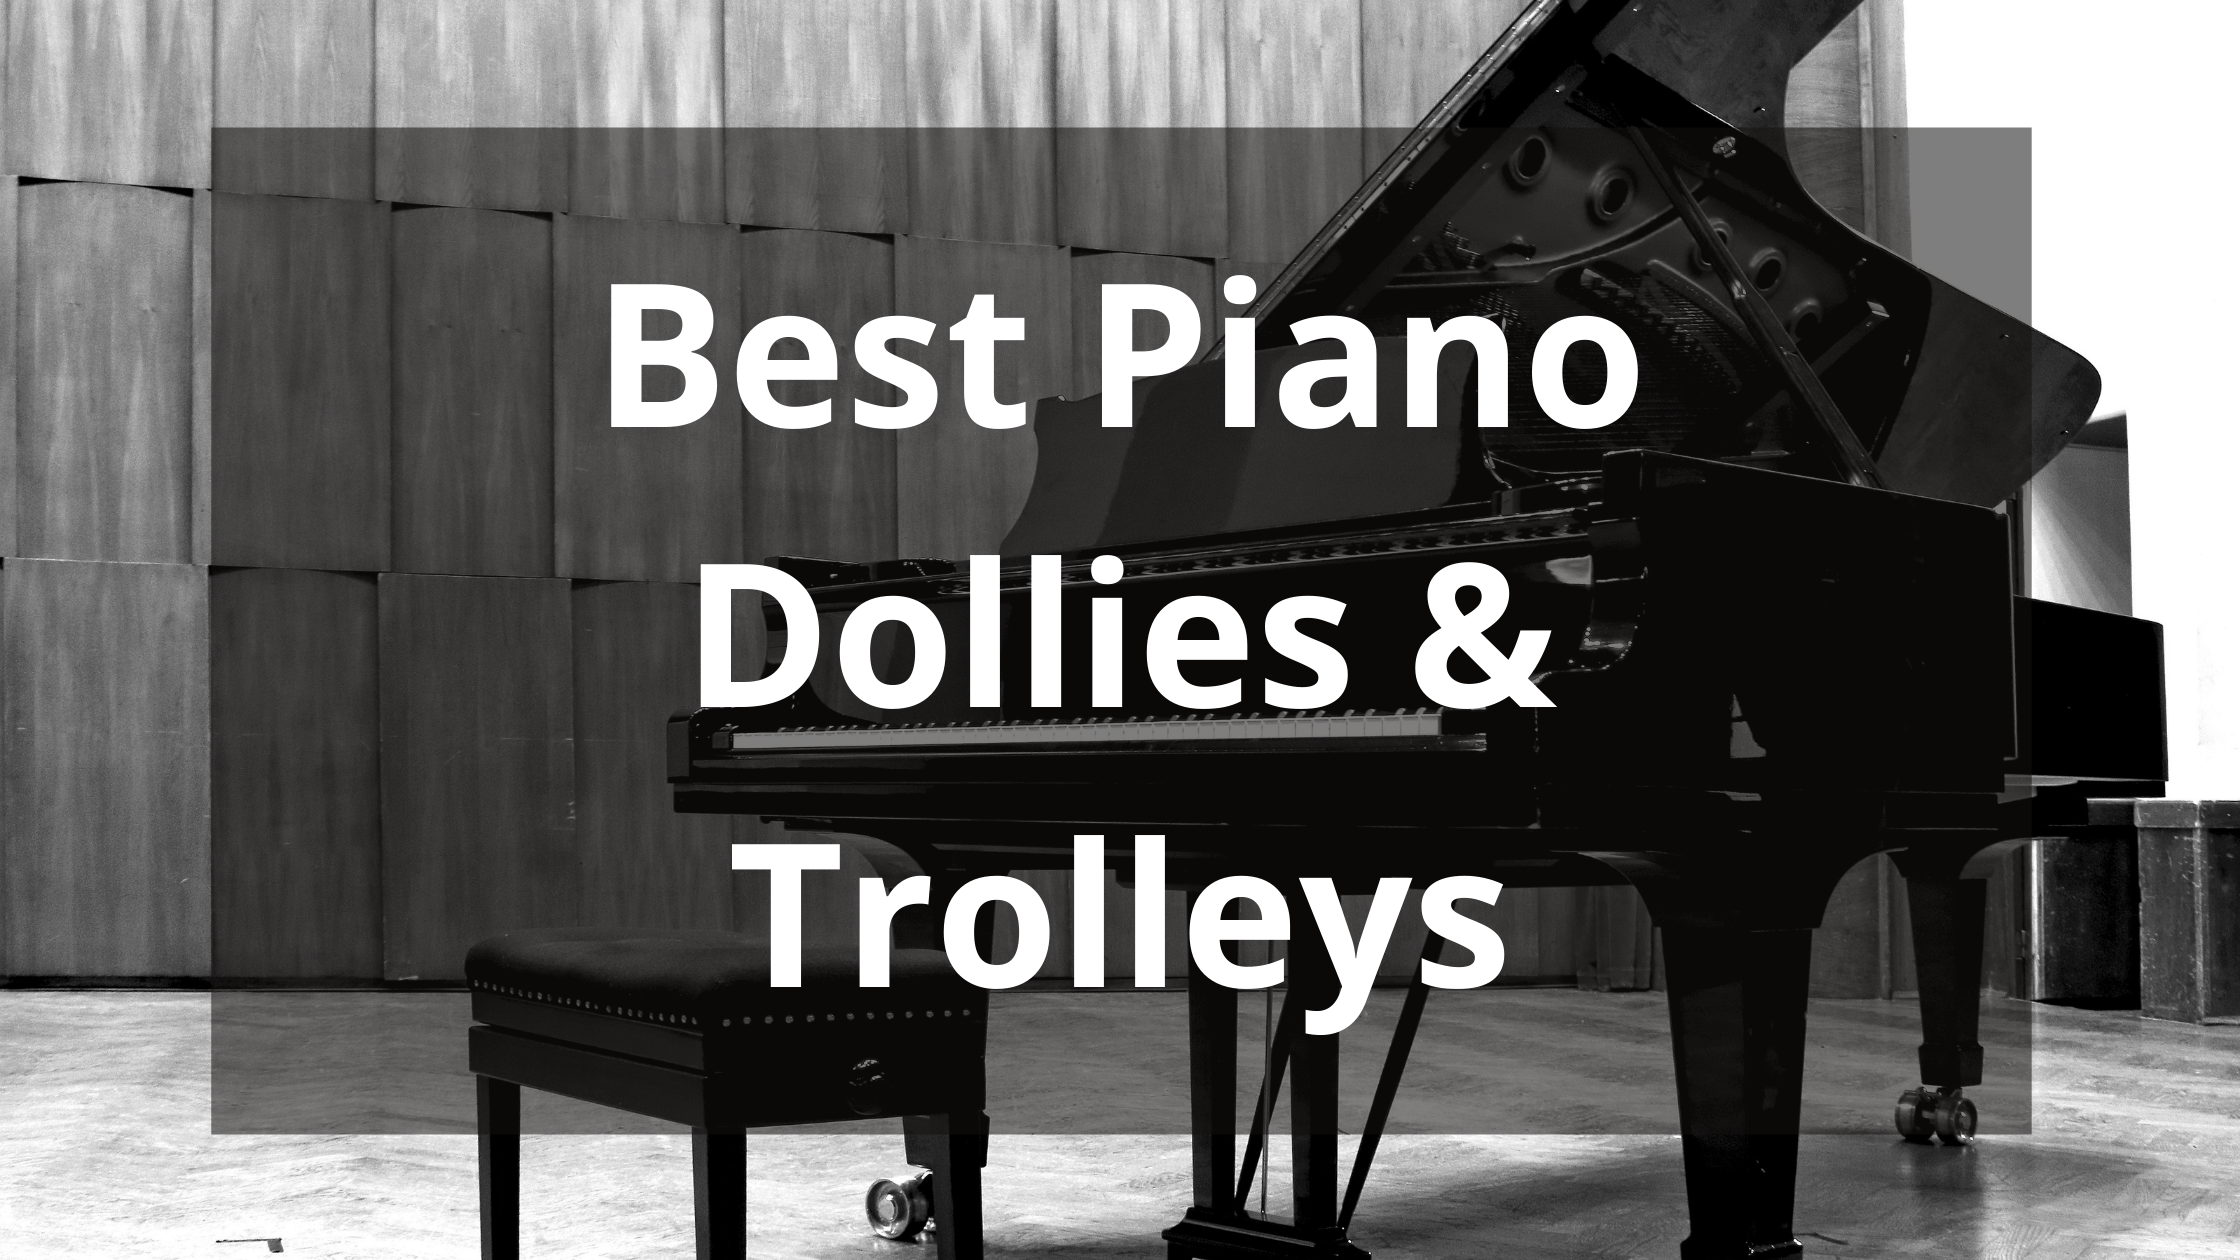 Best Piano Dollies & Trolleys